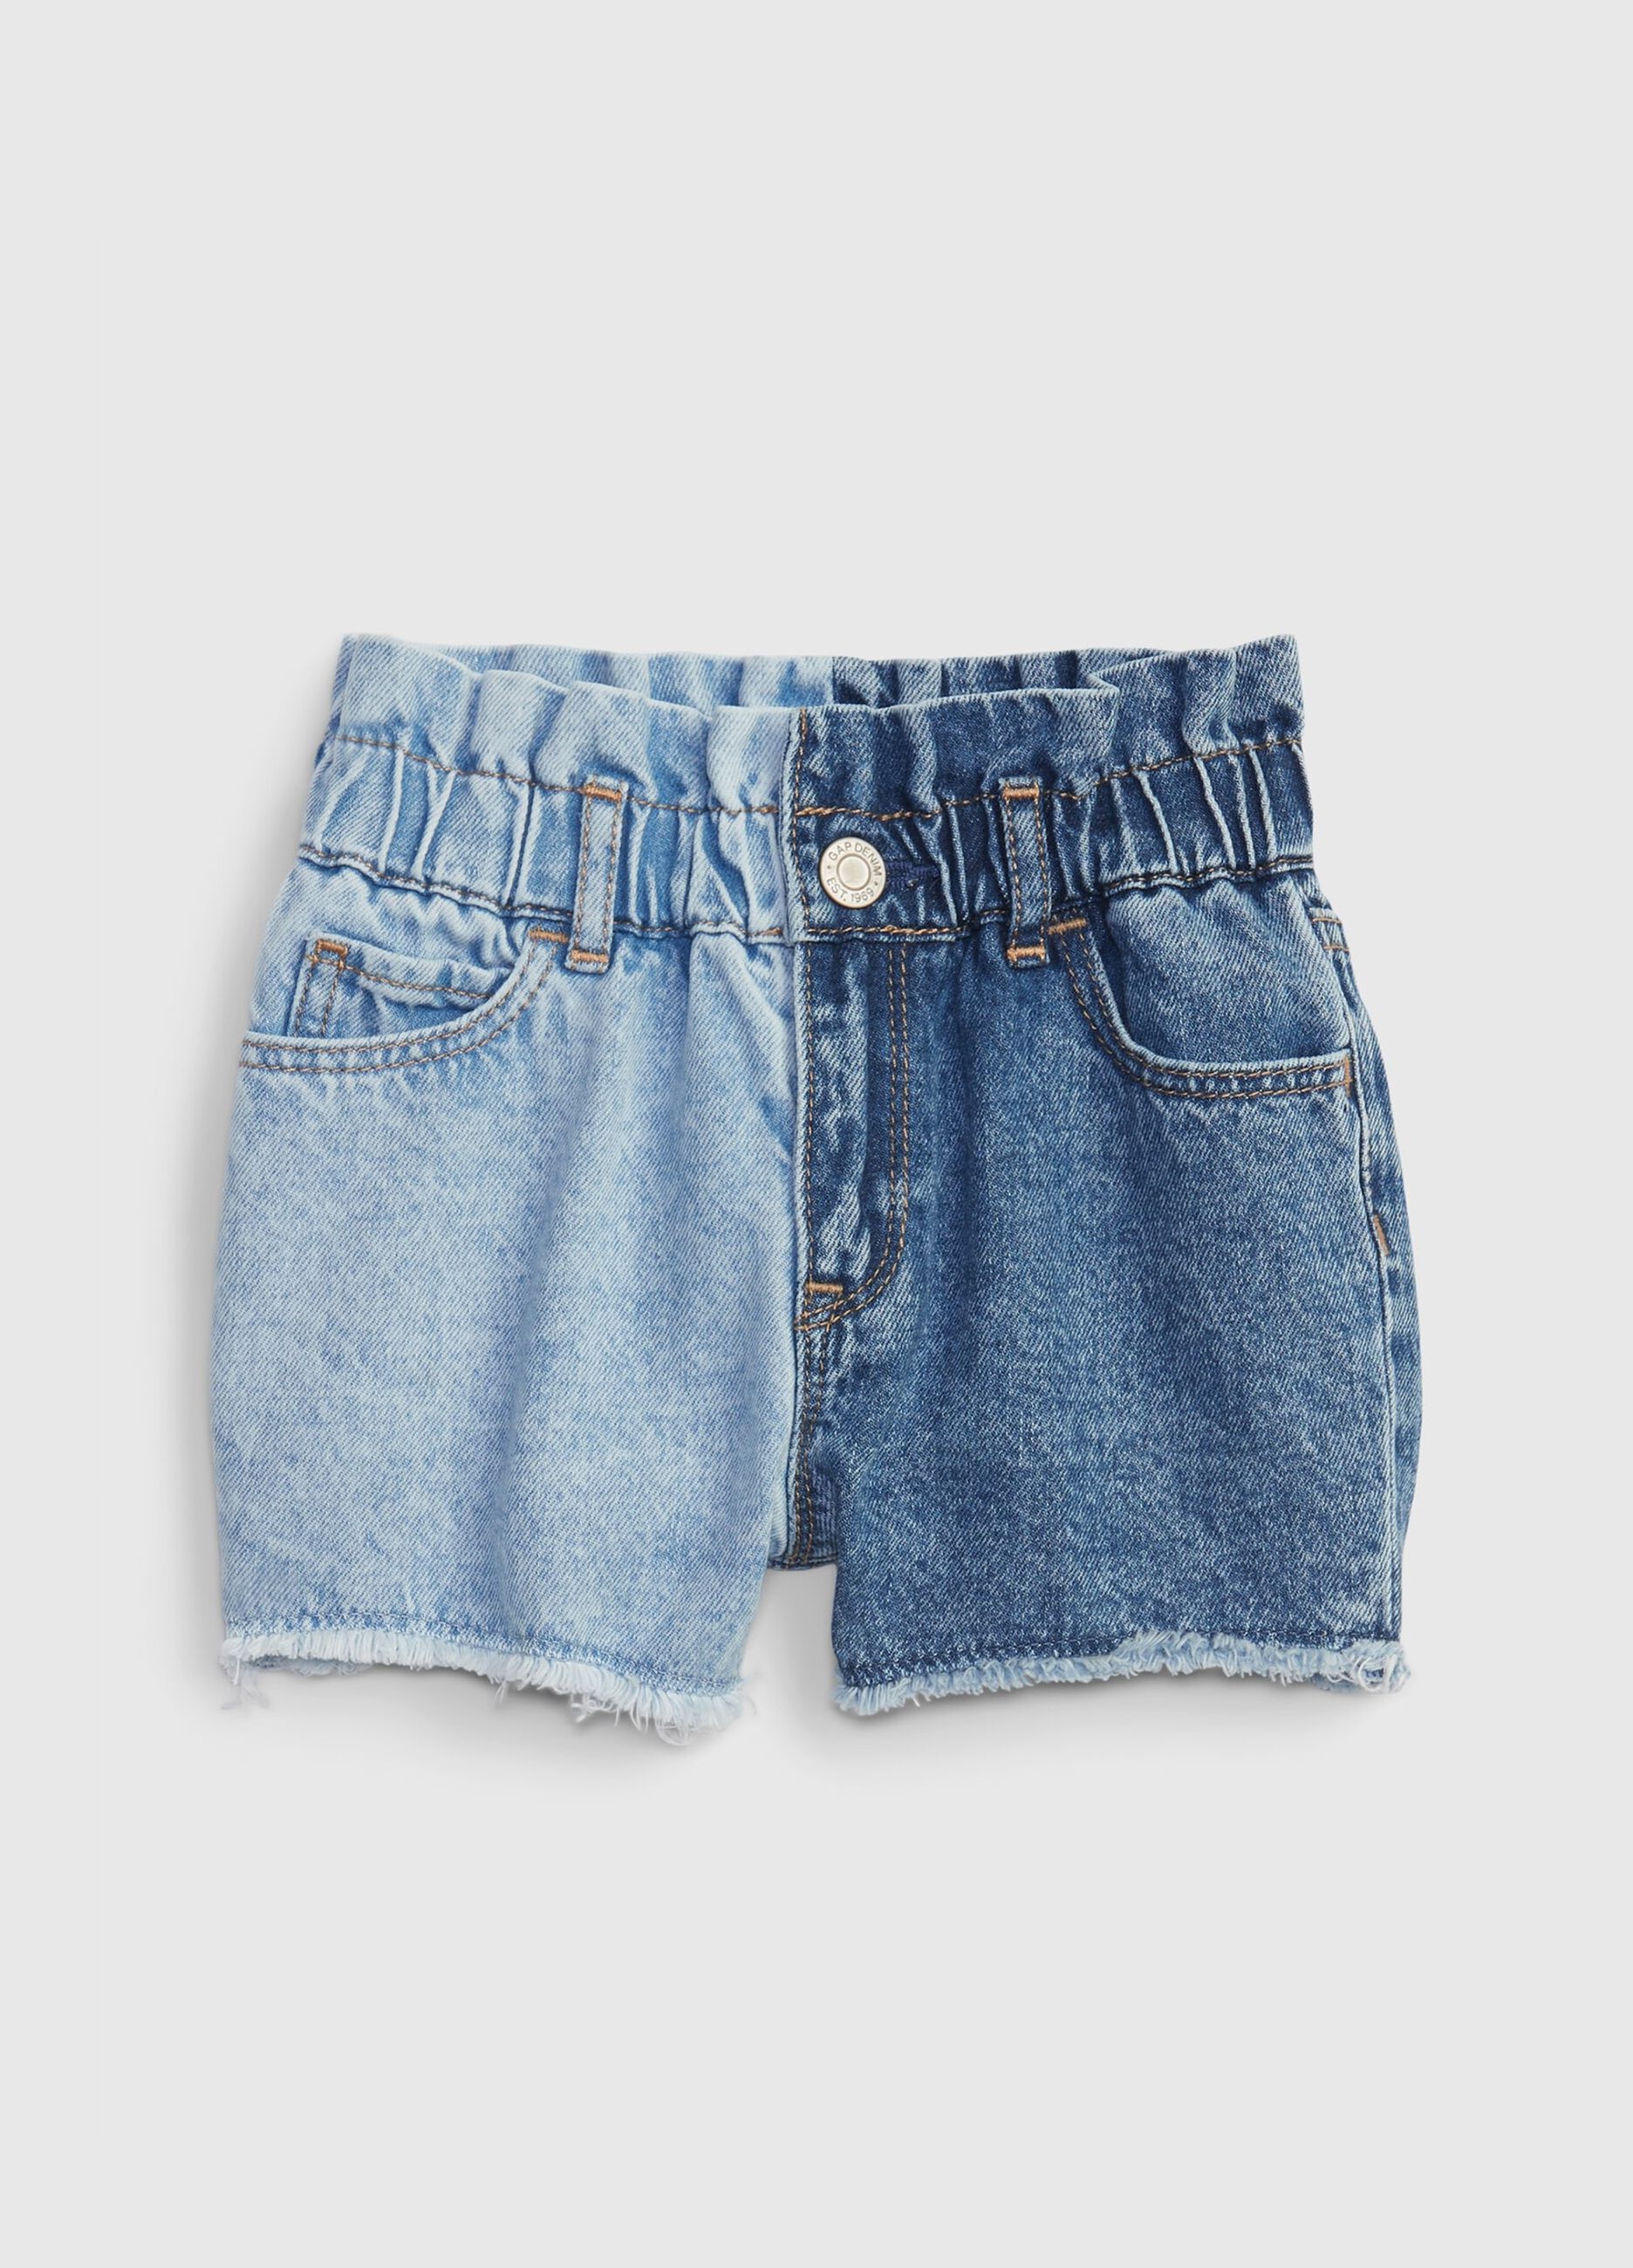 Mum-fit shorts in two-tone denim.